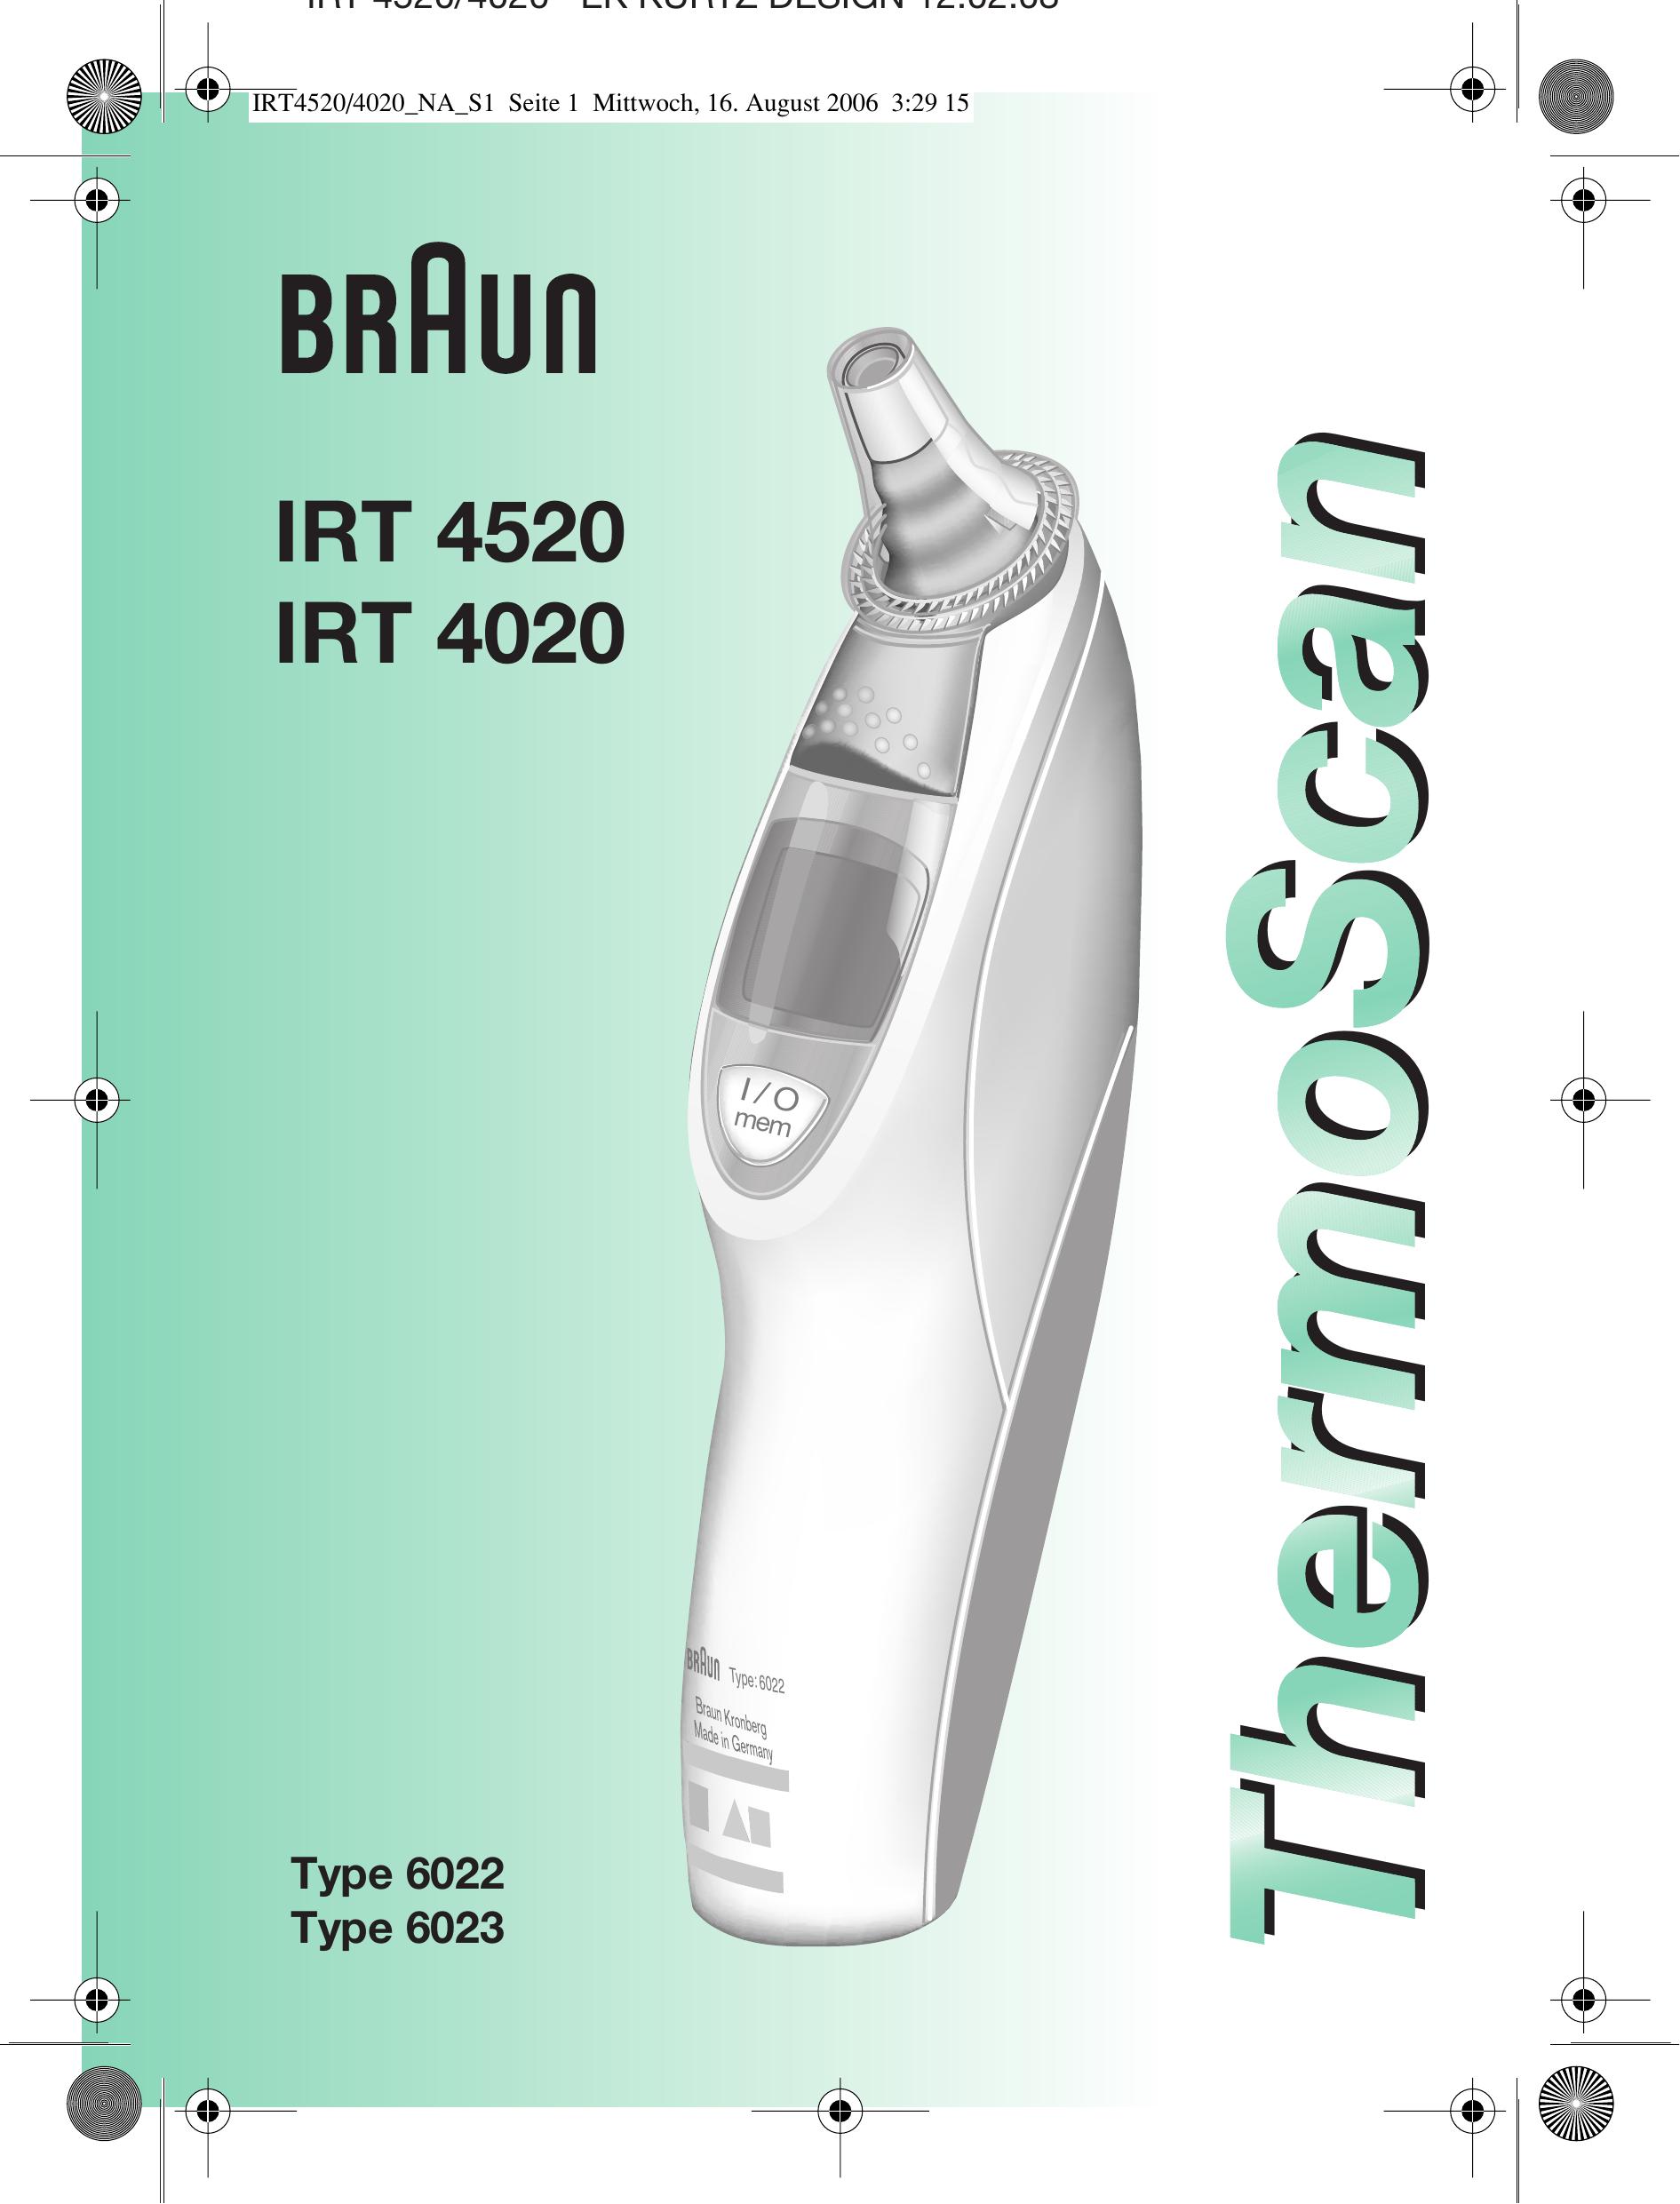 Braun IRT 4020 Thermometer User Manual